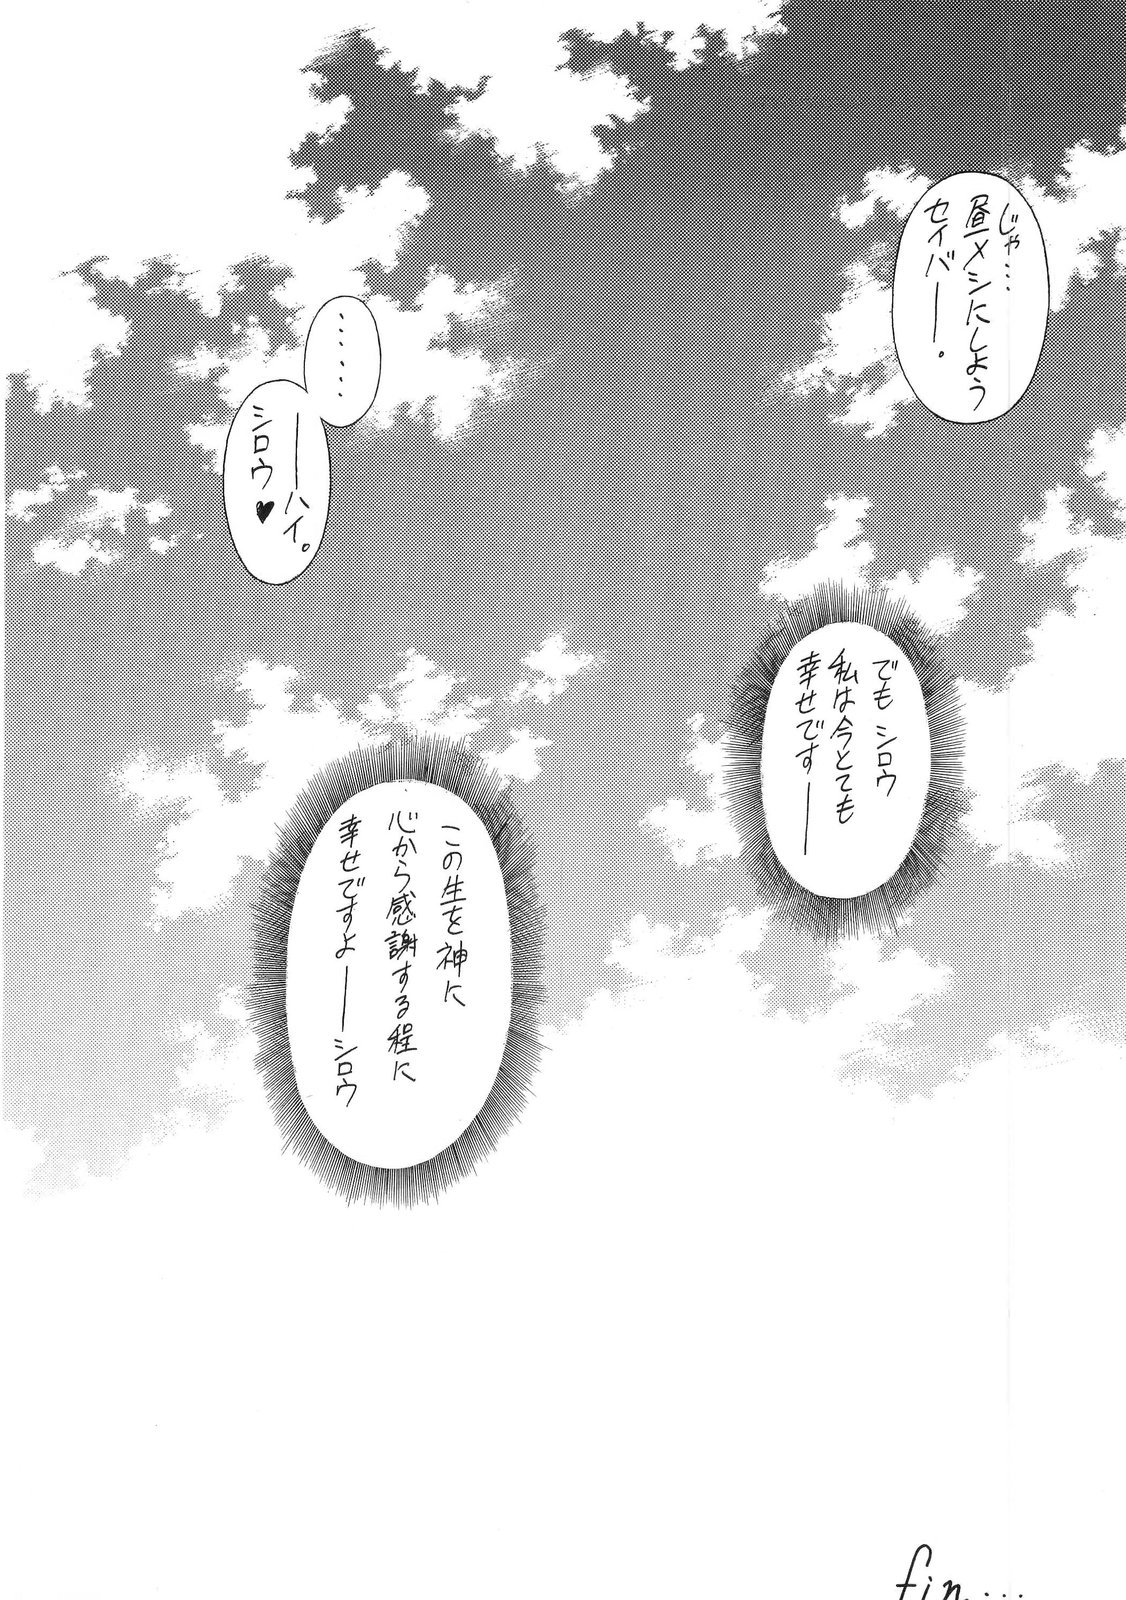 (C66) [Sanazura Doujinshi Hakkoujo (Sanazura Hiroyuki)] Atomic-S (Fate/stay night) (C66) [さなづら同人誌発行所 (さなづらひろゆき)] Atomic-S (Fate/stay night)